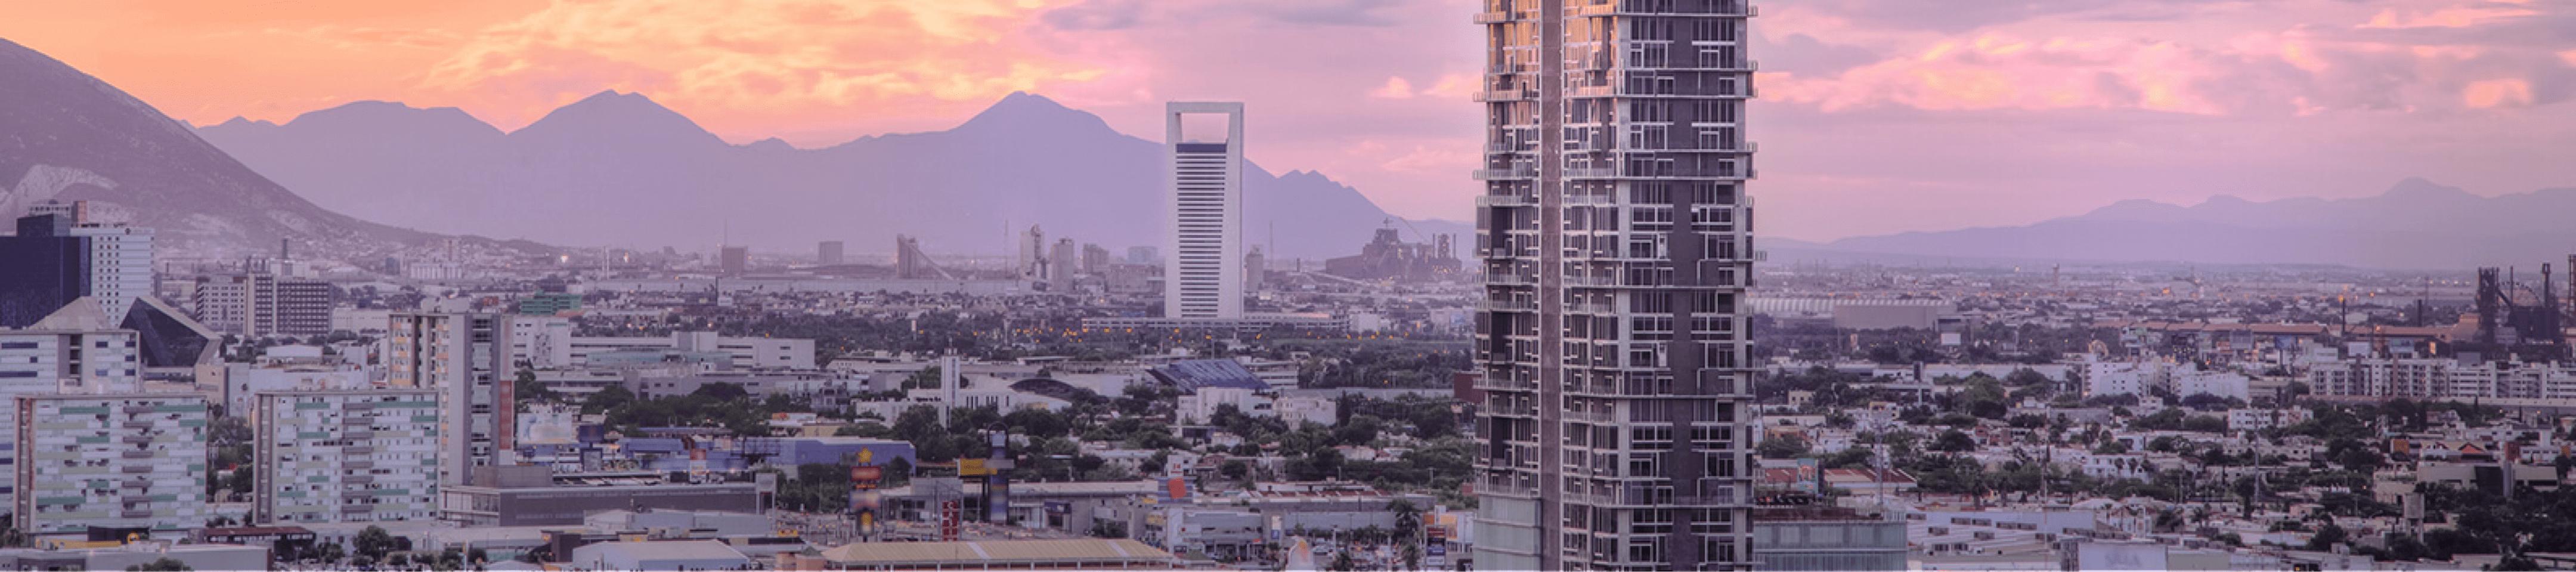 Skyline in Mexico